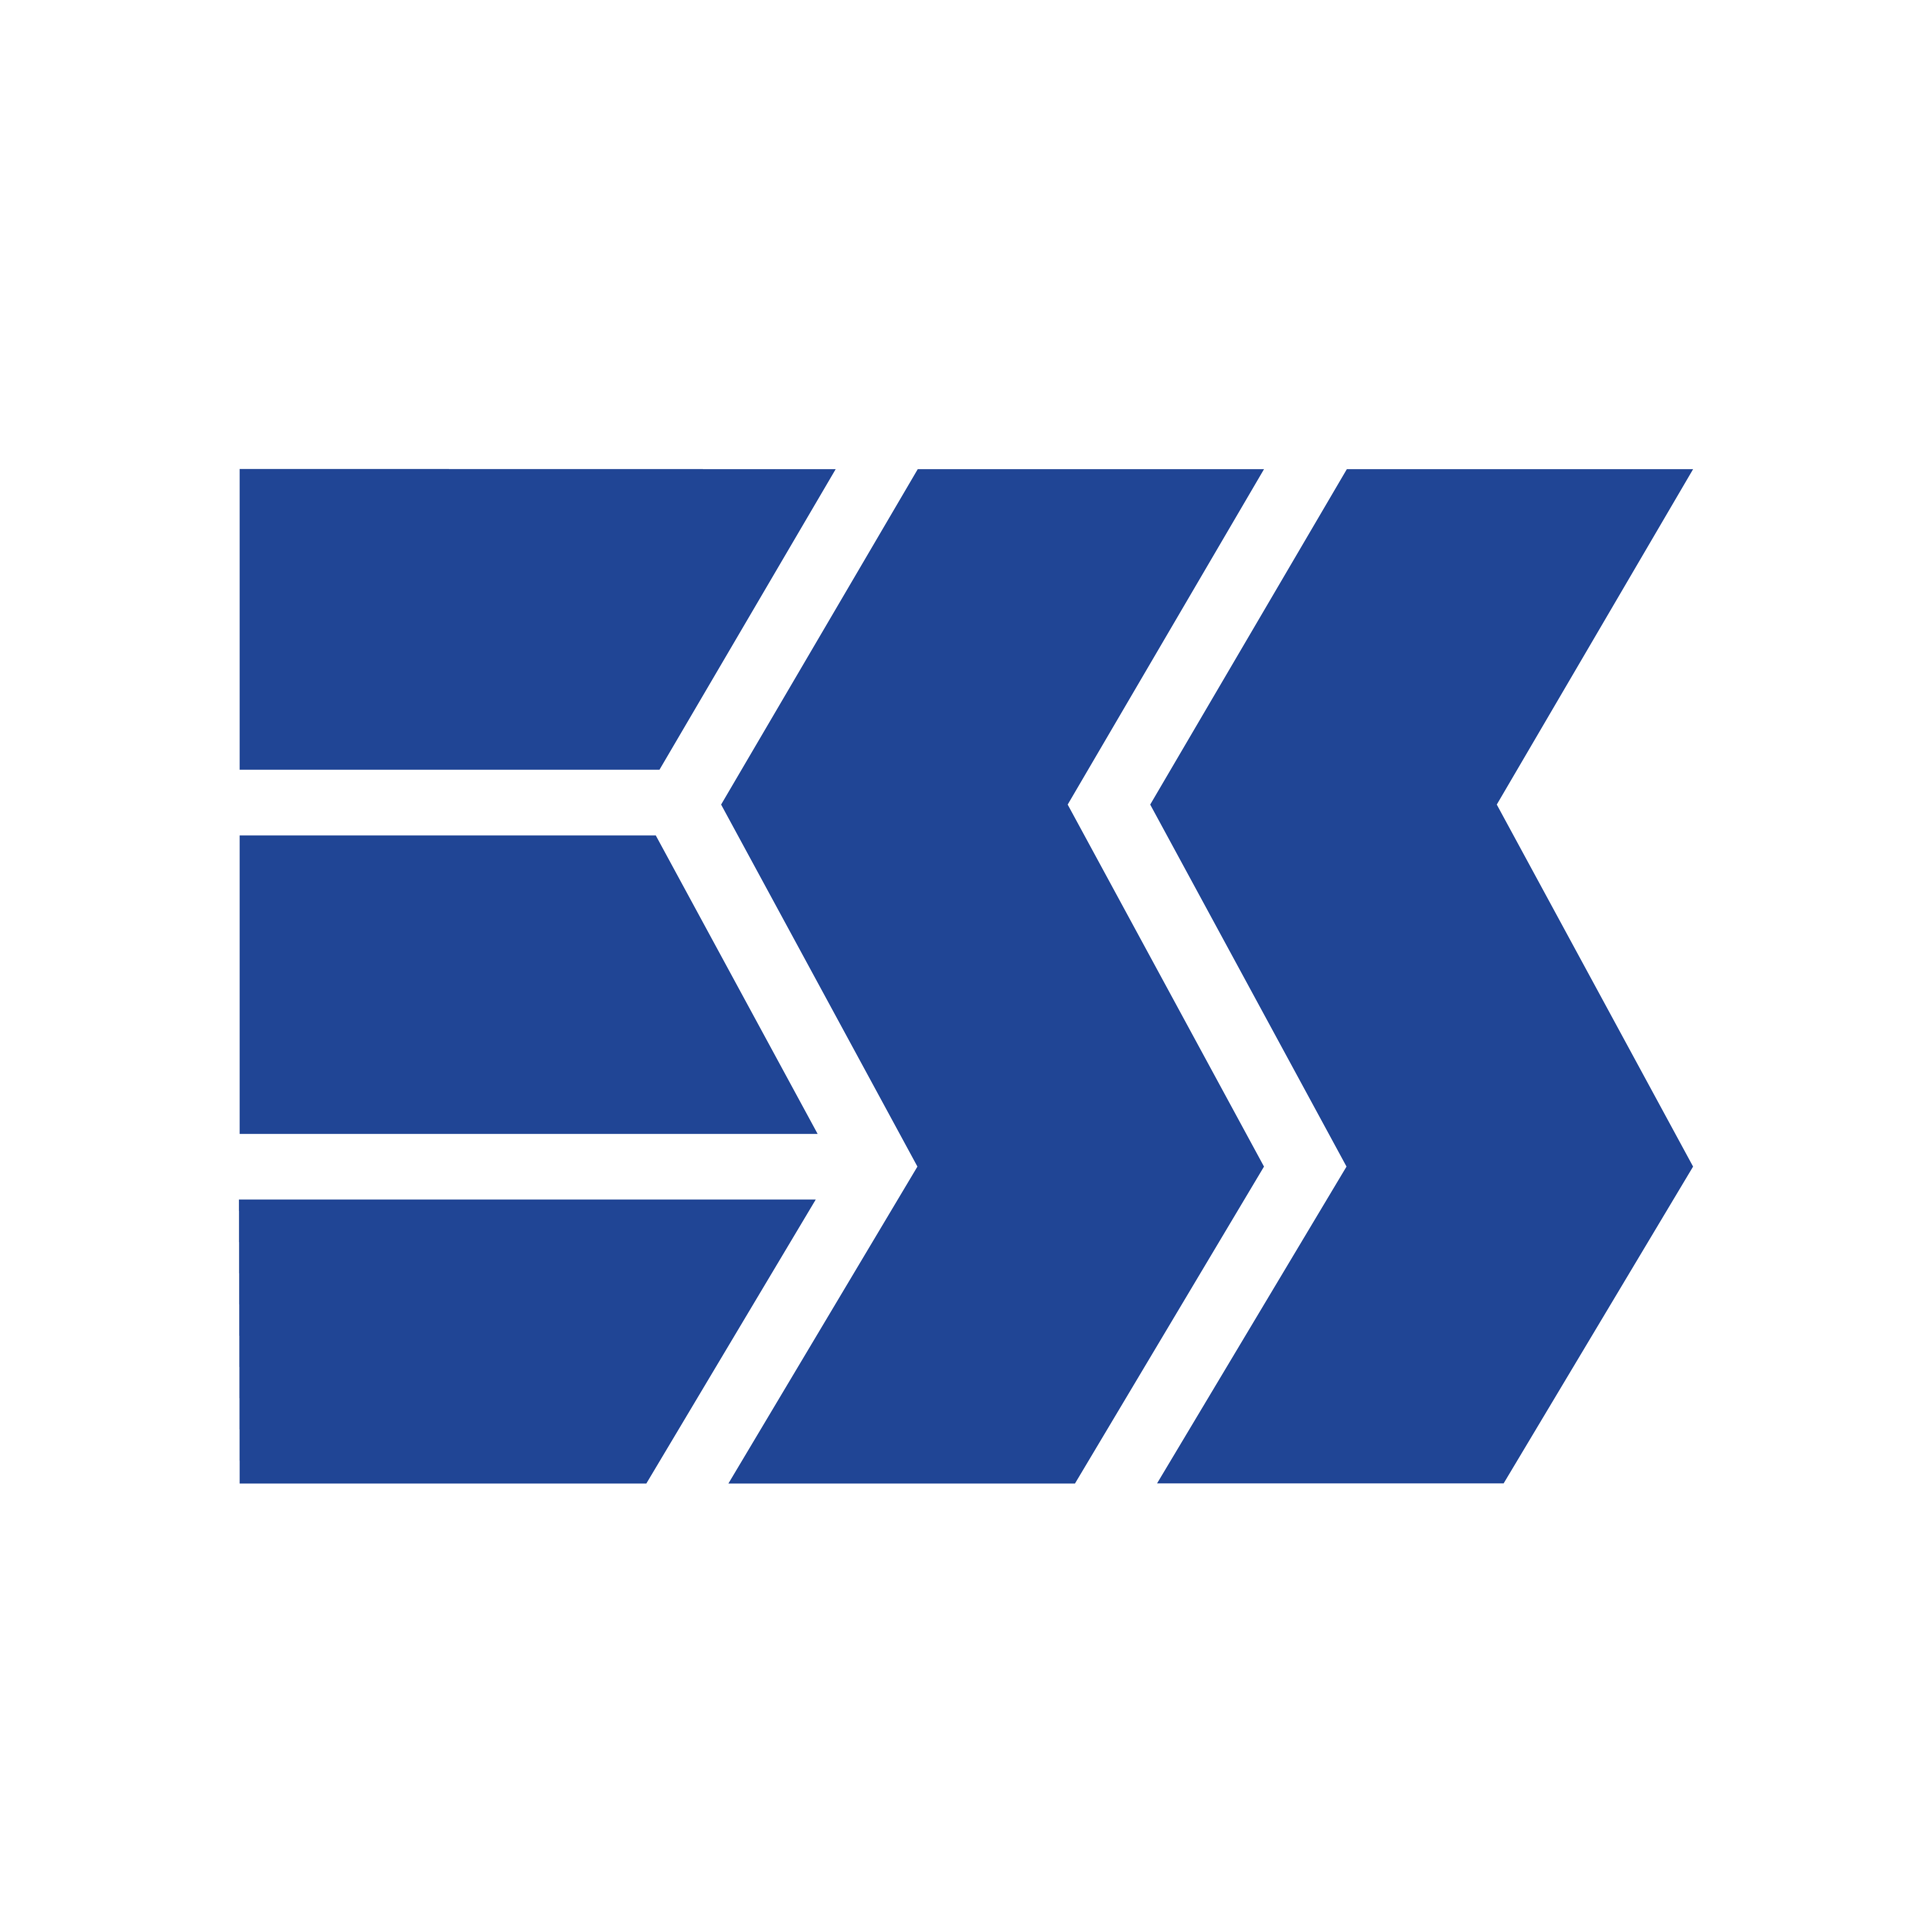 ESS_Logo_png.png